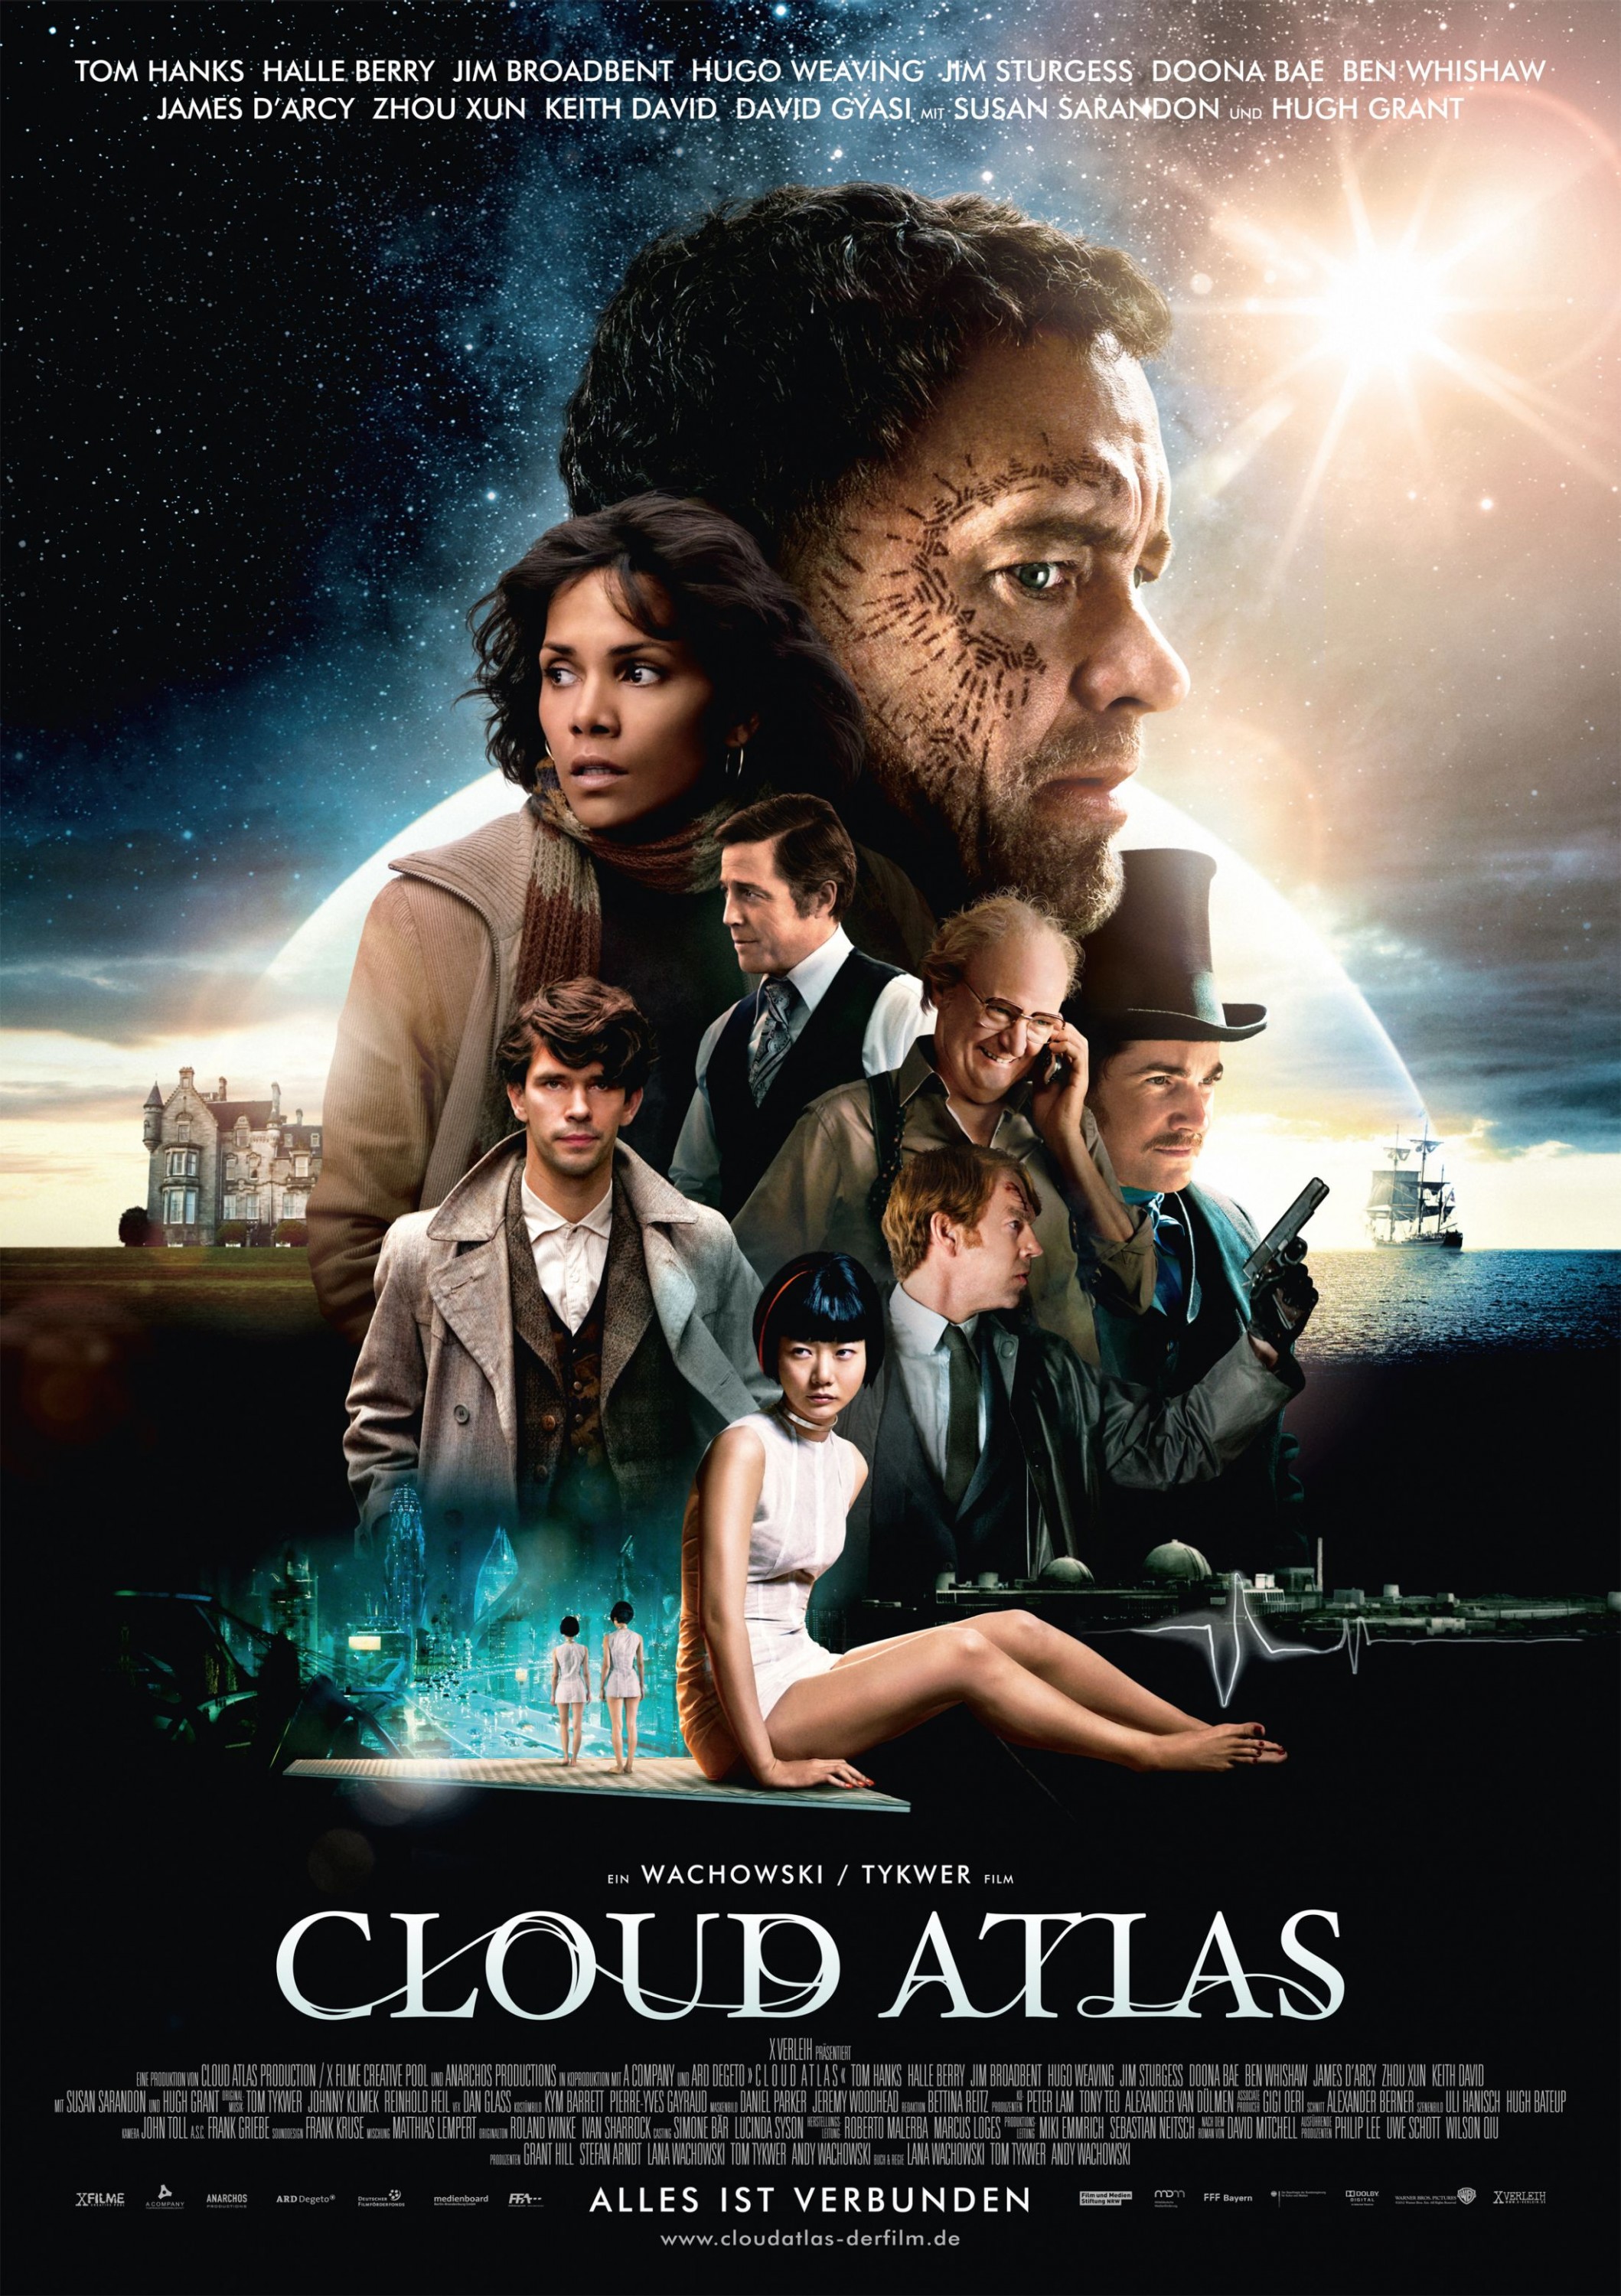 Cloud Atlas (film) Warner Bros photo photo